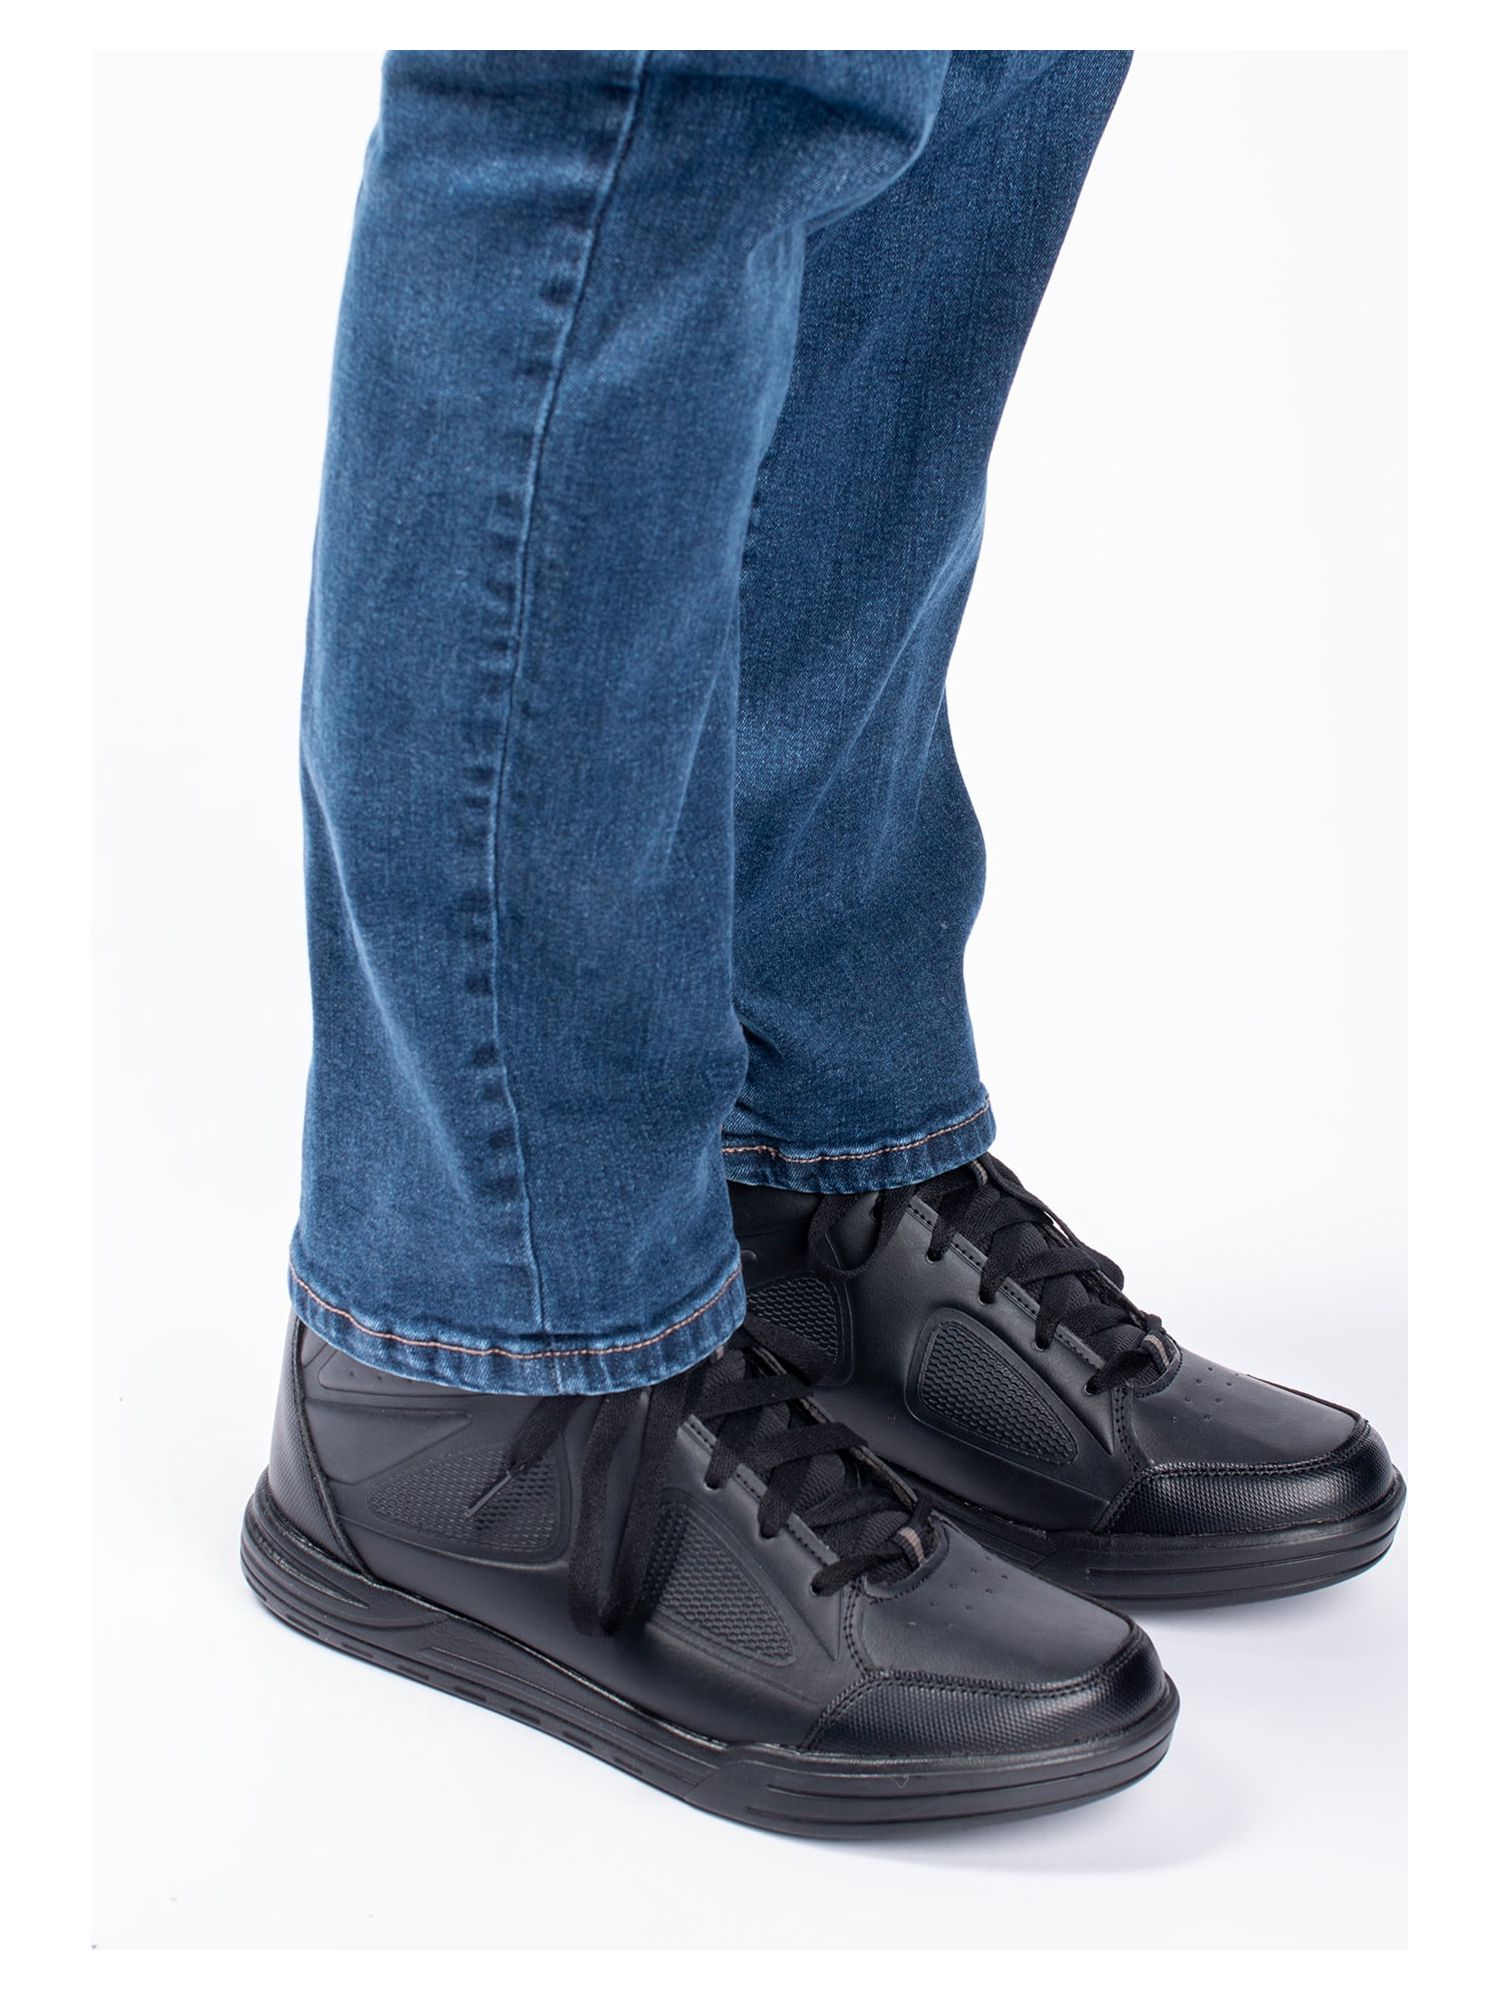 Tredsafe Men's Passit High Top Slip Resistant Shoes - image 2 of 6